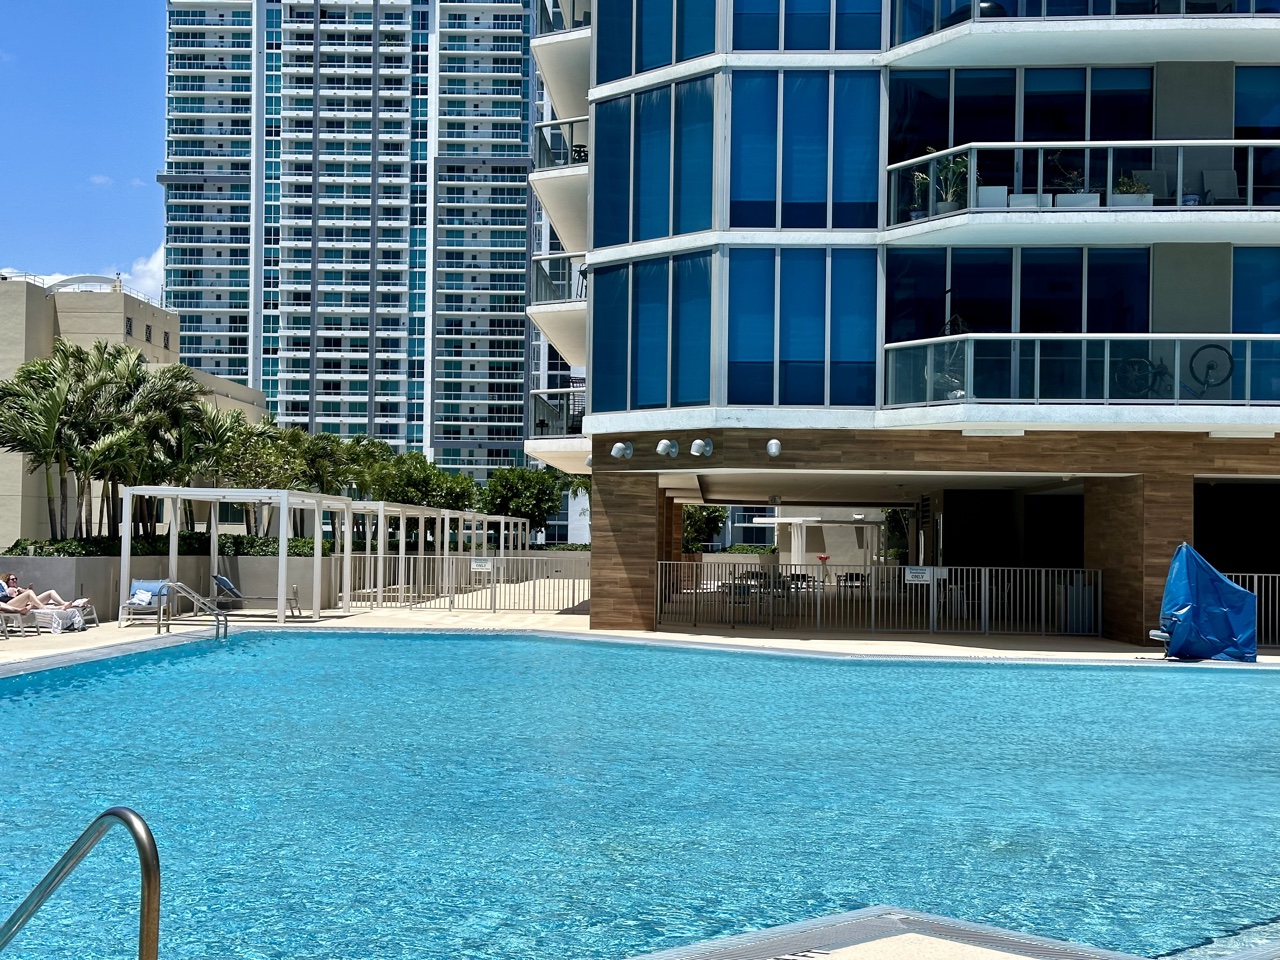 Hyatt Centric Brickell Miami pool deck